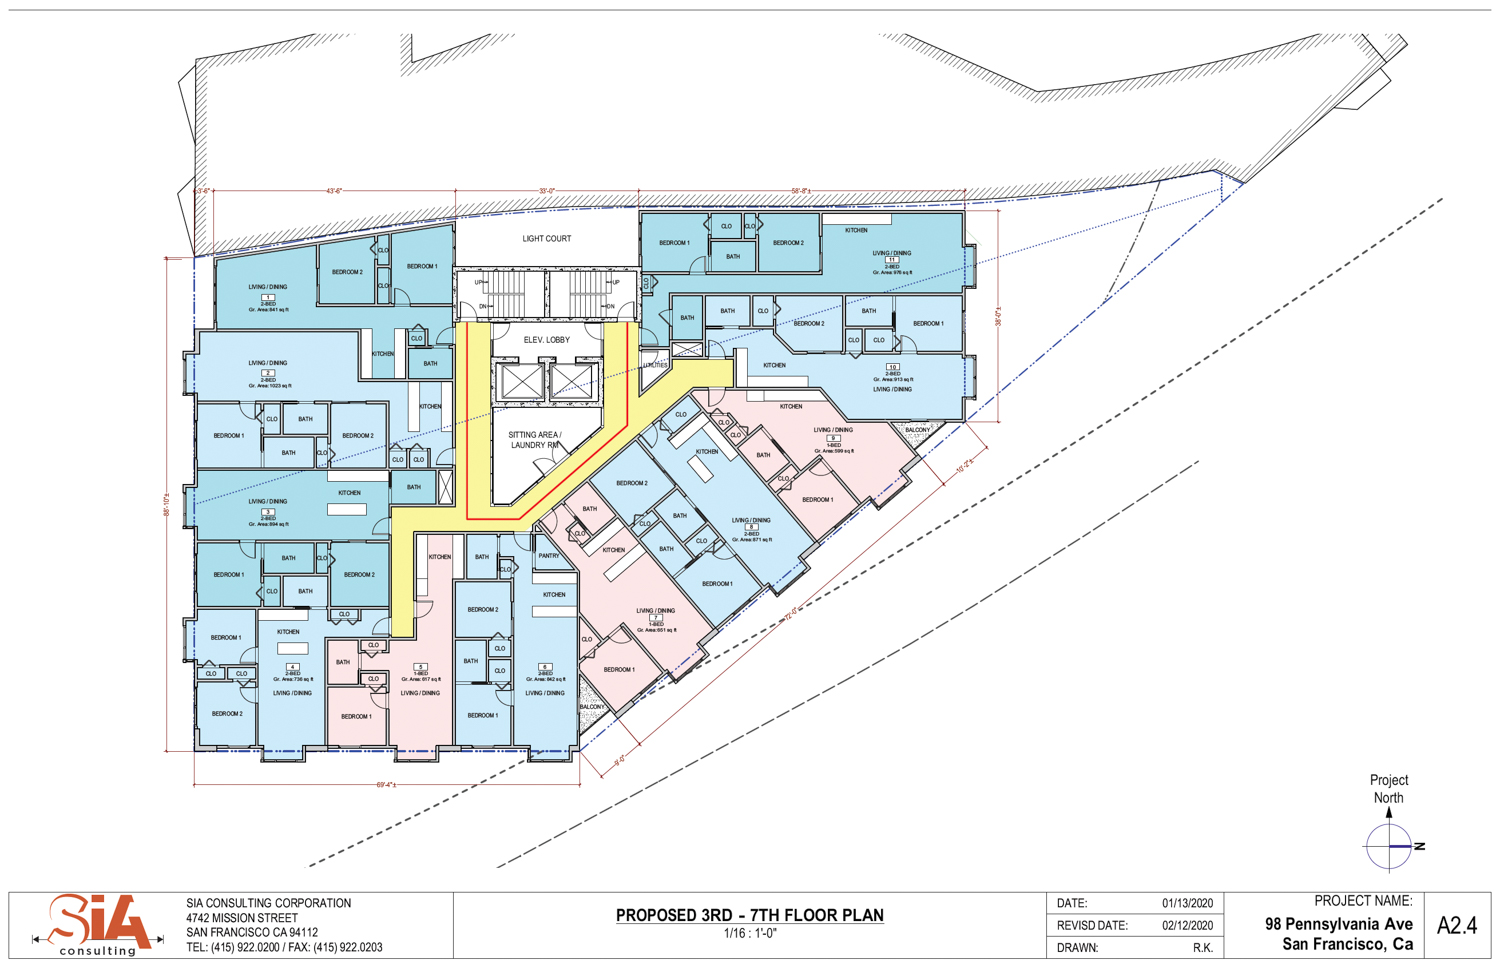 98 Pennsylvania Avenue updated floorplan, drawing via SIA Consulting